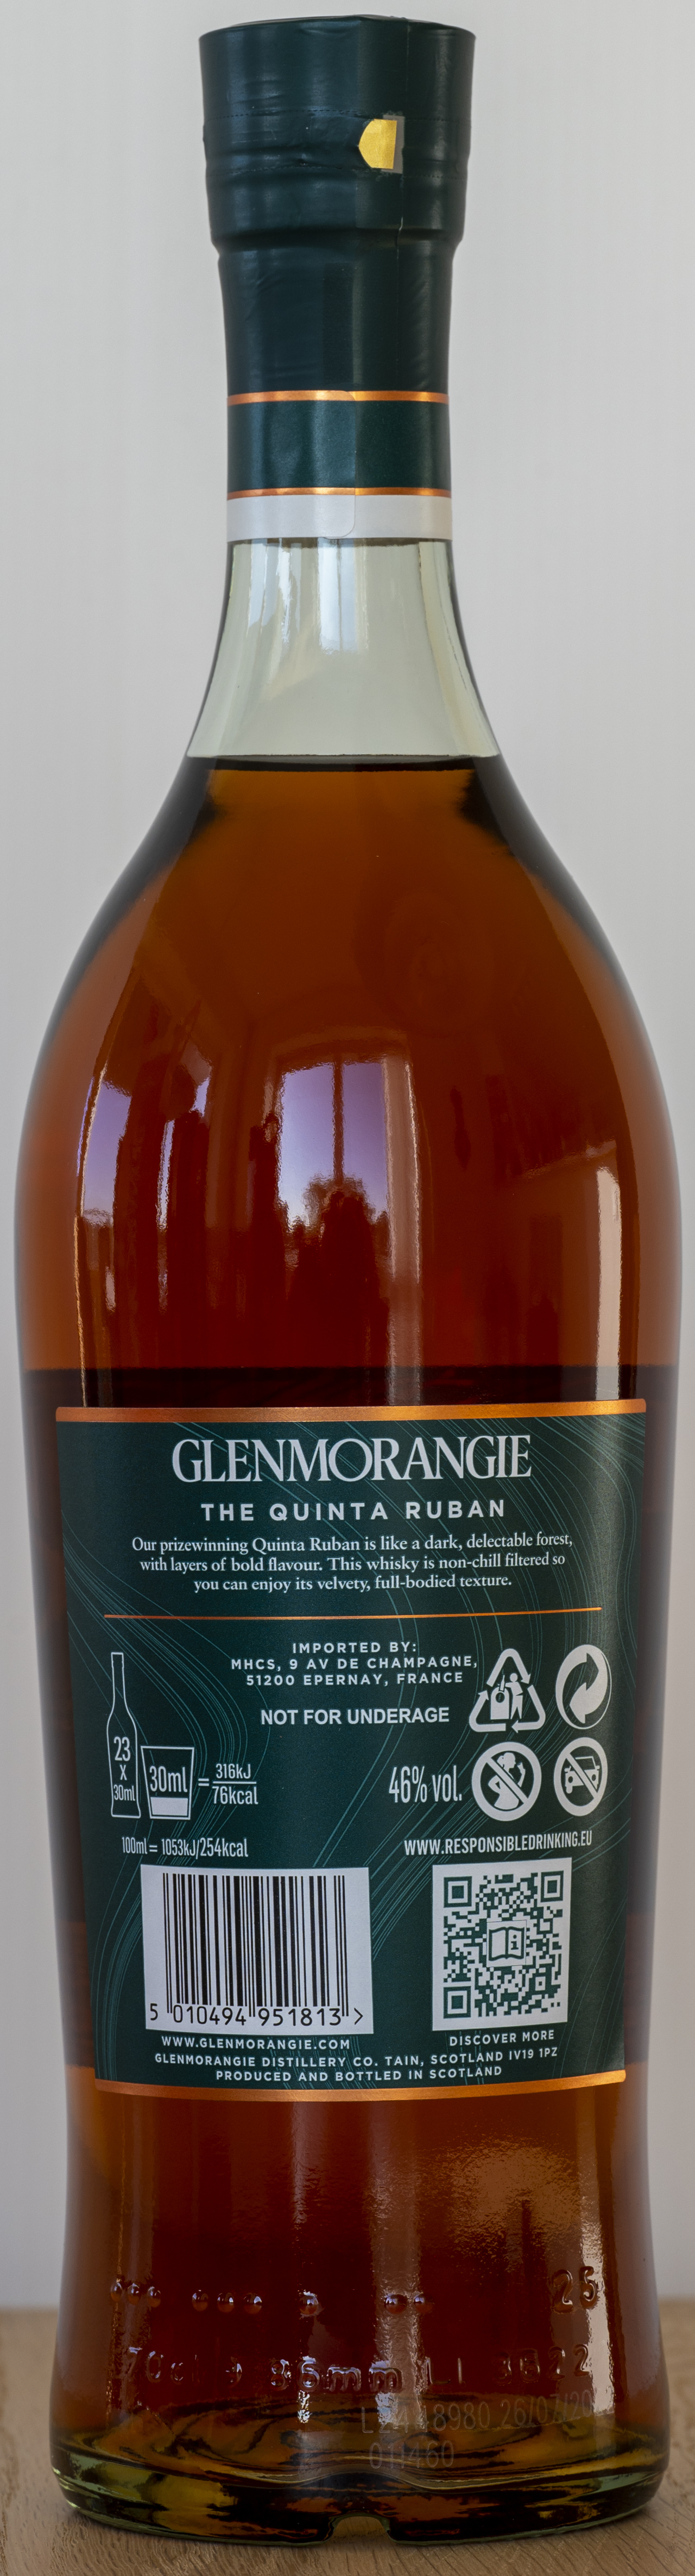 Billede: Z62_6460 - Glenmorangie 14 - bottle back.jpg